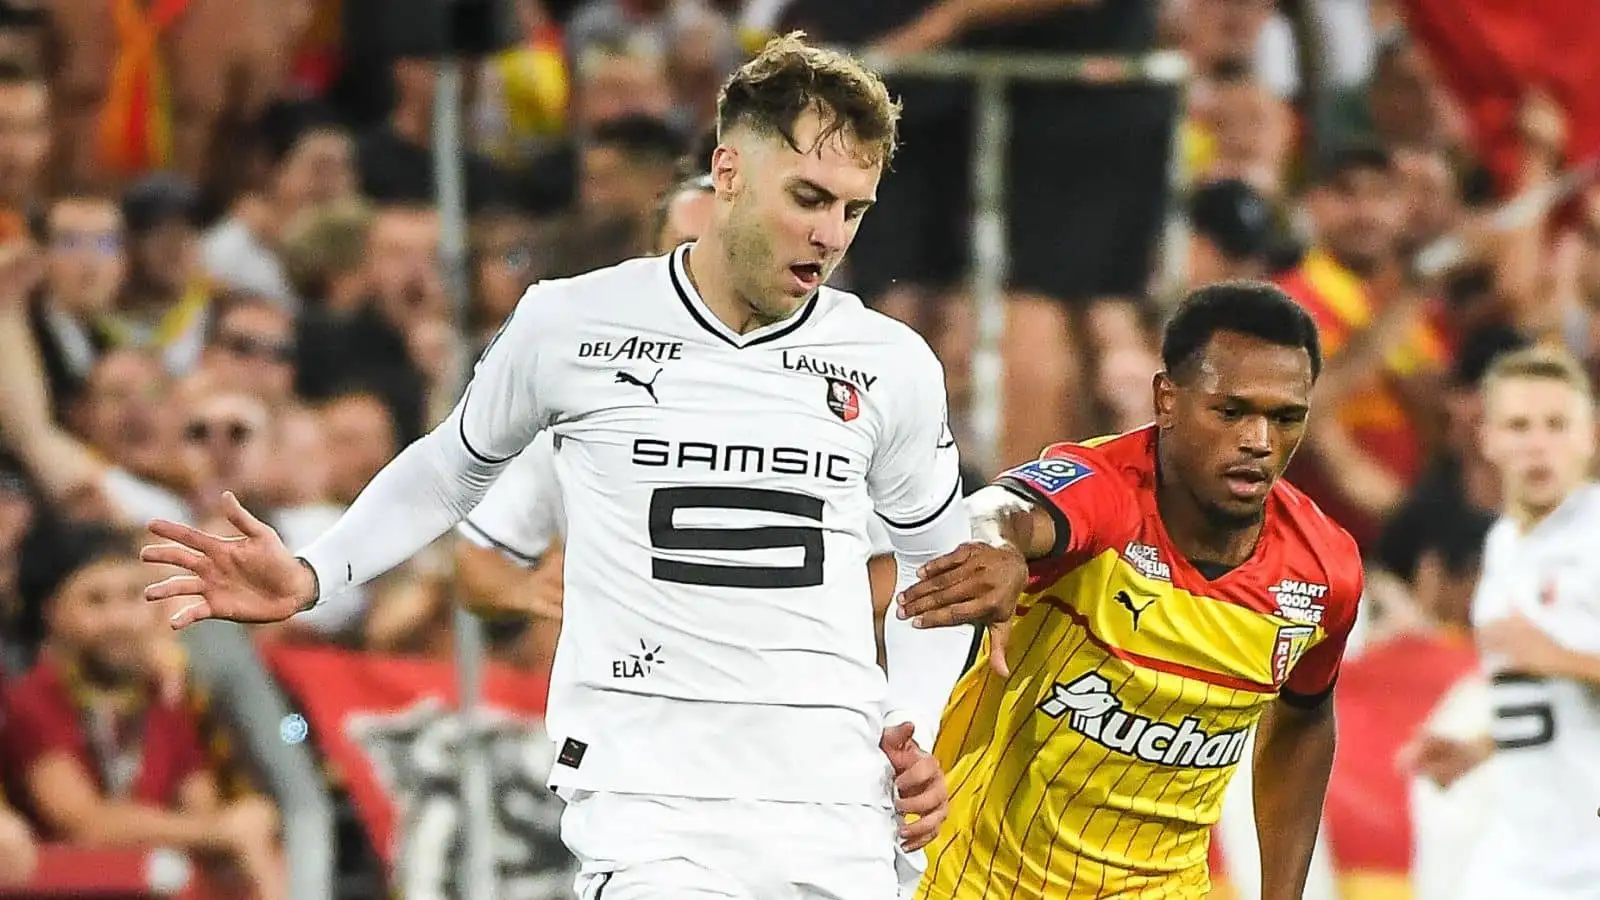 Joe Rodon on loan at Rennes